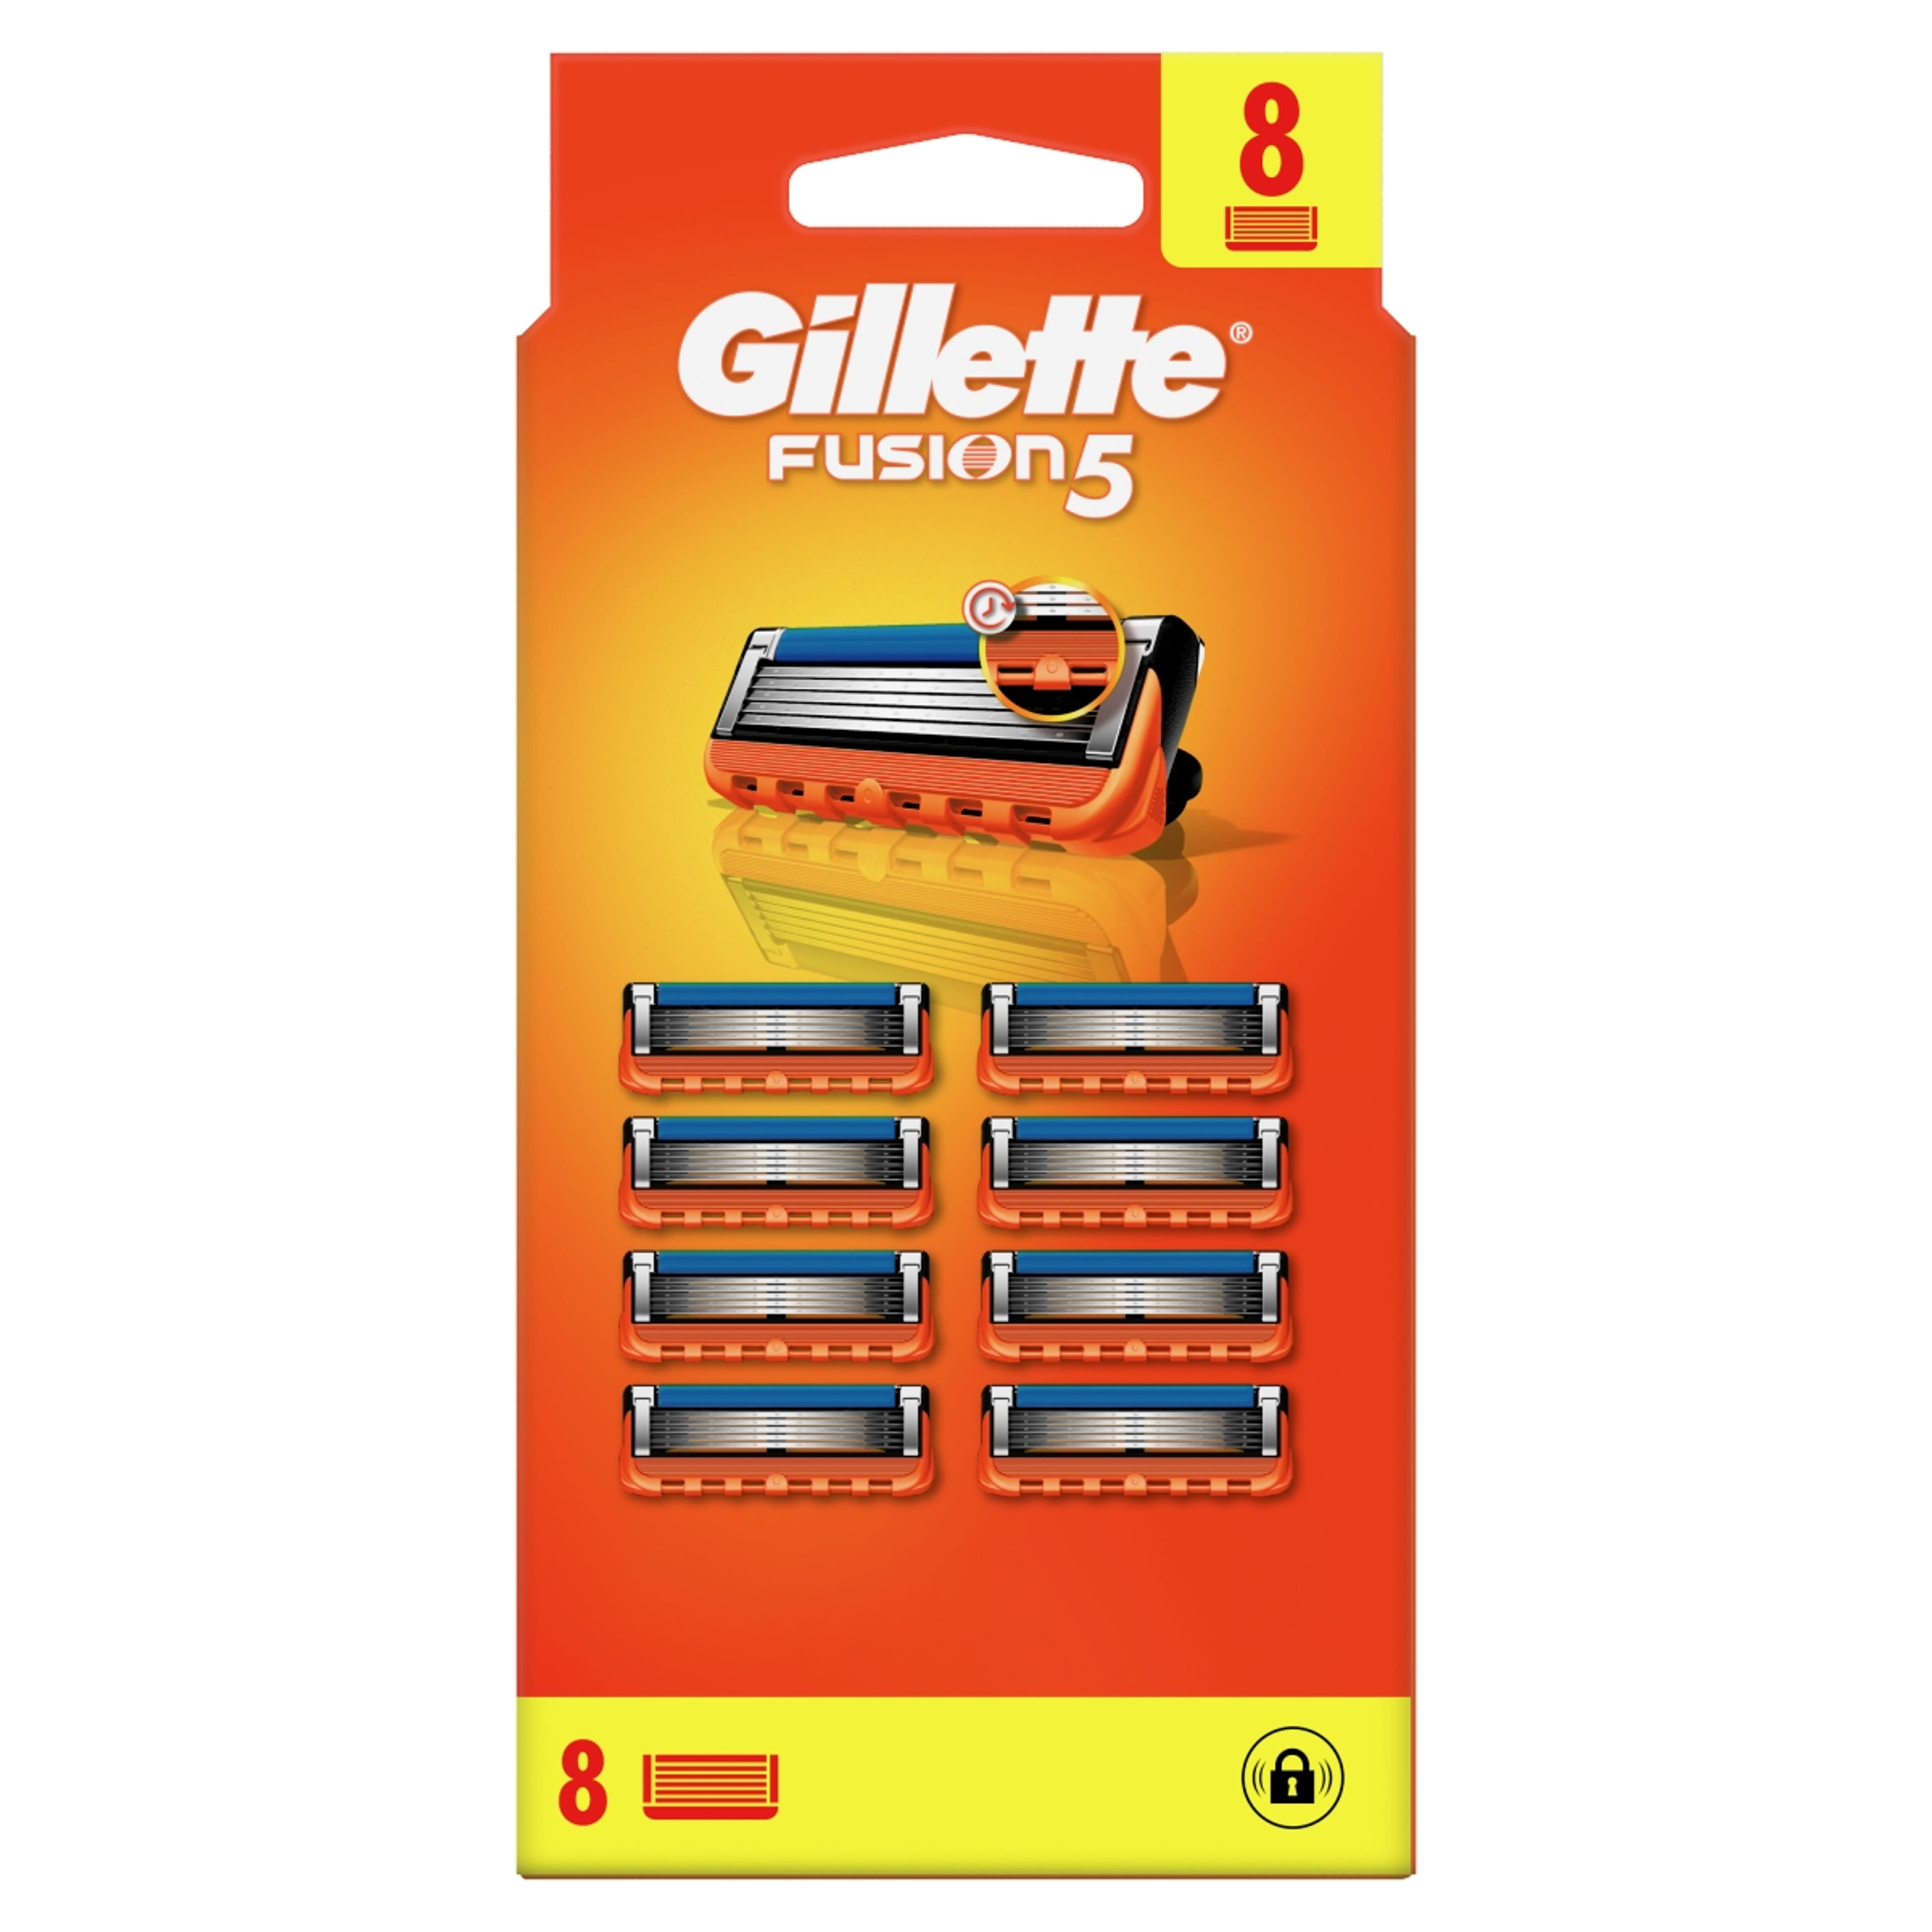 Gillette Fusion5 borotvabetétek férfi borotvához - 8 db-1